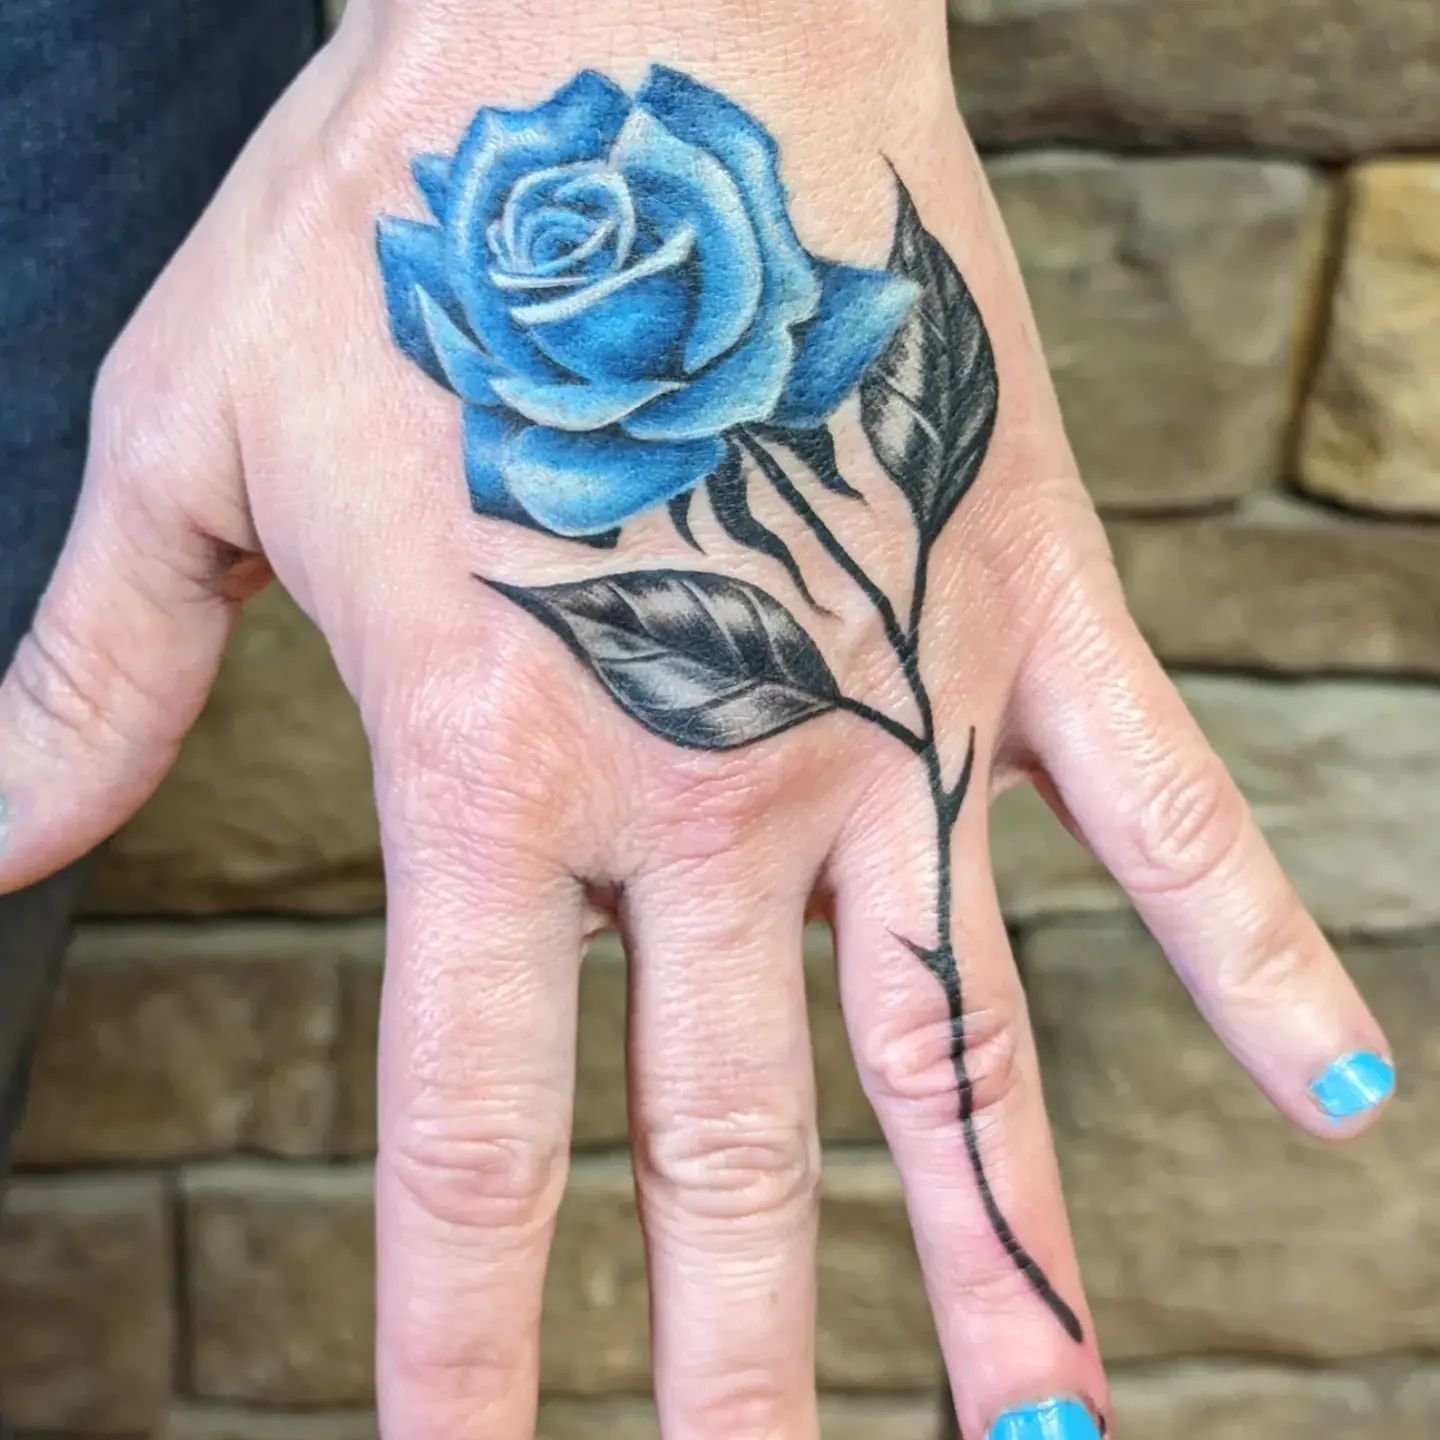 Blue rose 
By: Nelson
-
-
-
-
#tattoo #customtattoo #ottawatattoo #orleansontario #ottawaontario #rocklandontario #besttattoo #qualitytattoo #colourtattoo #art #skinart #bodyart #design #tattooartist